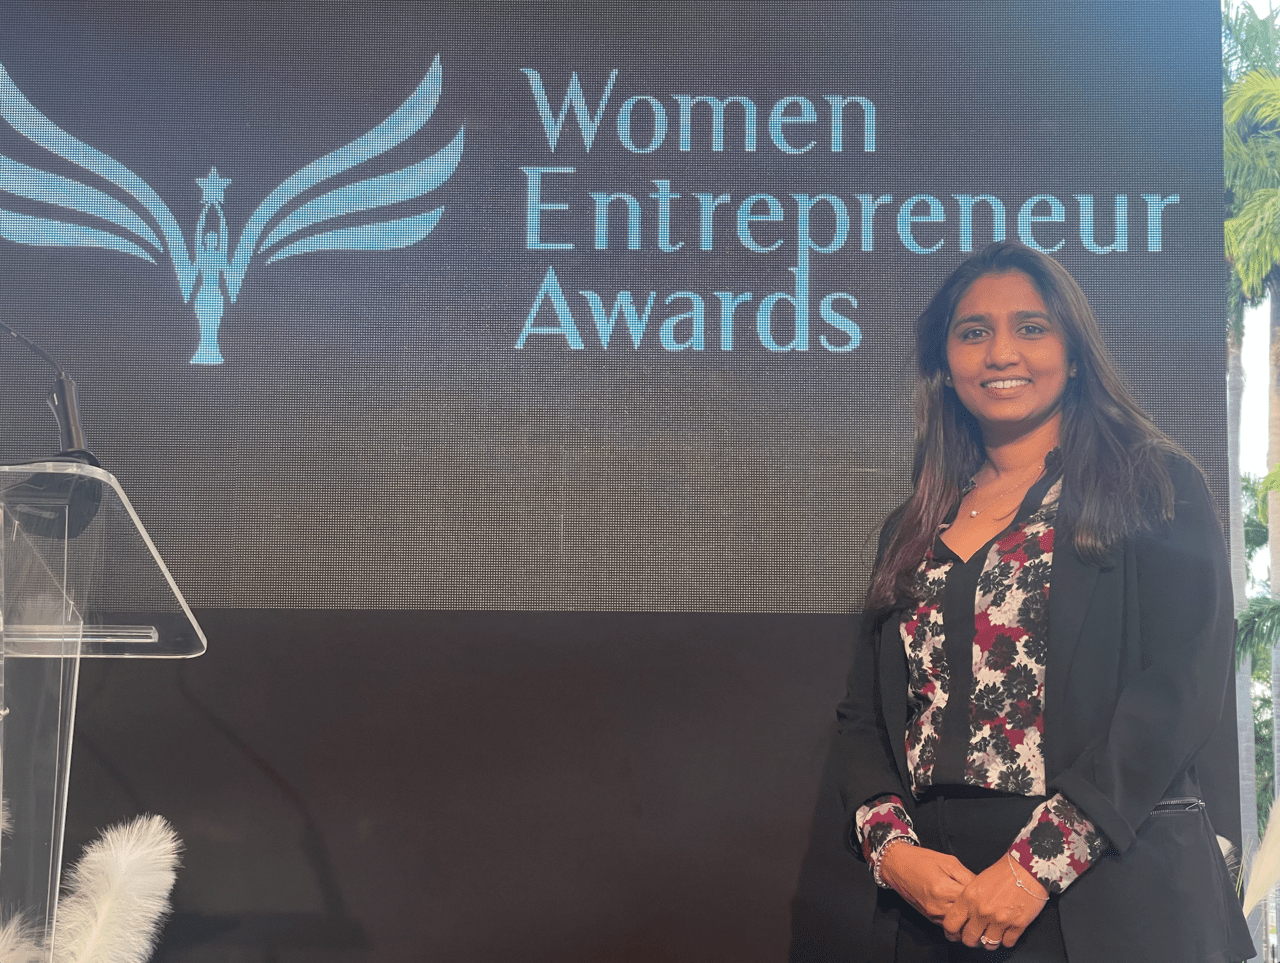 Celebrating Divia Deesha Gungah’s Remarkable Journey to the Quarter Finals of the Women Entrepreneur Awards